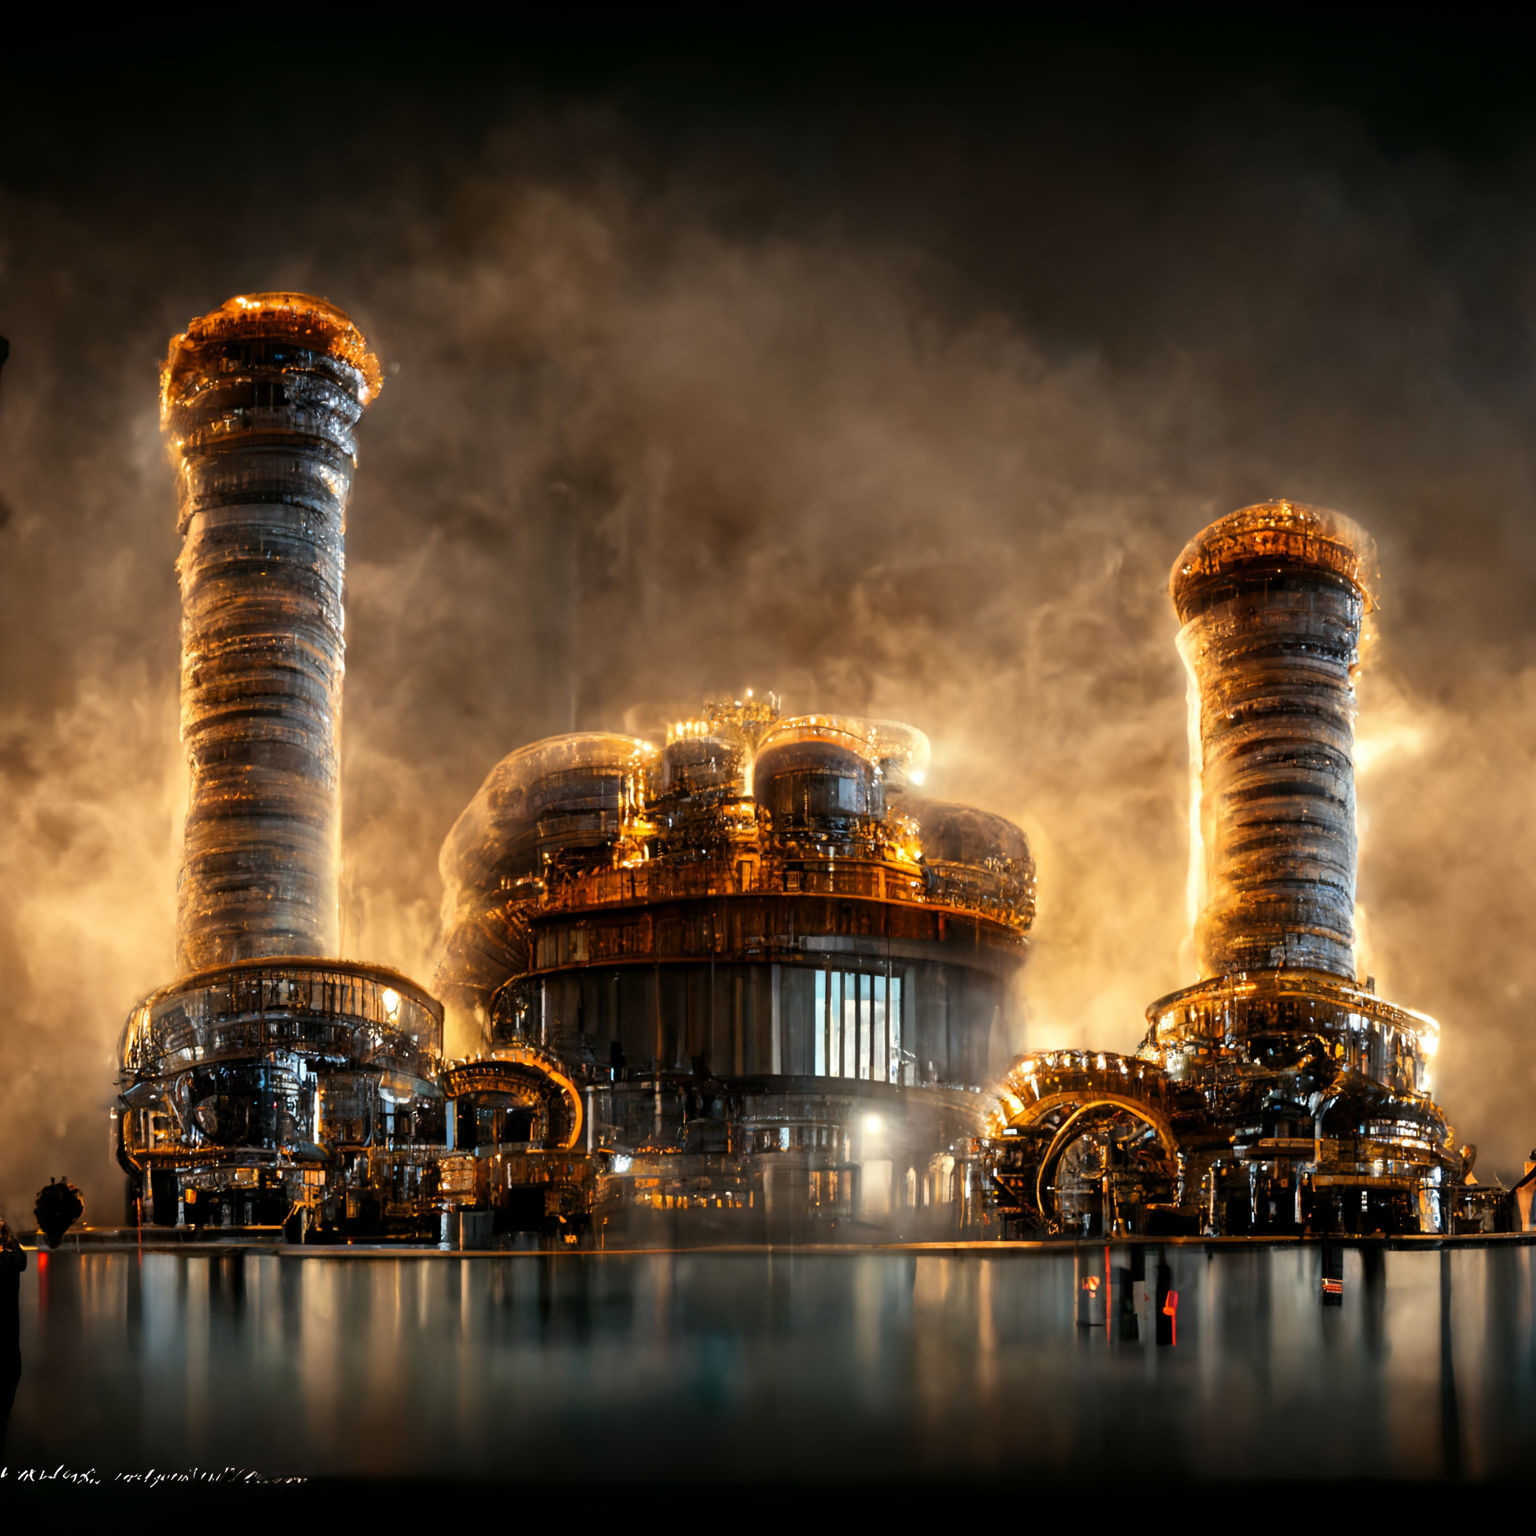 futuristic steampunk power plant, mammoth reactor, steam everywhere, highly detailed futuristic power plant, 4k cinema, 32k resolution, masterpiece landscape. --uplight